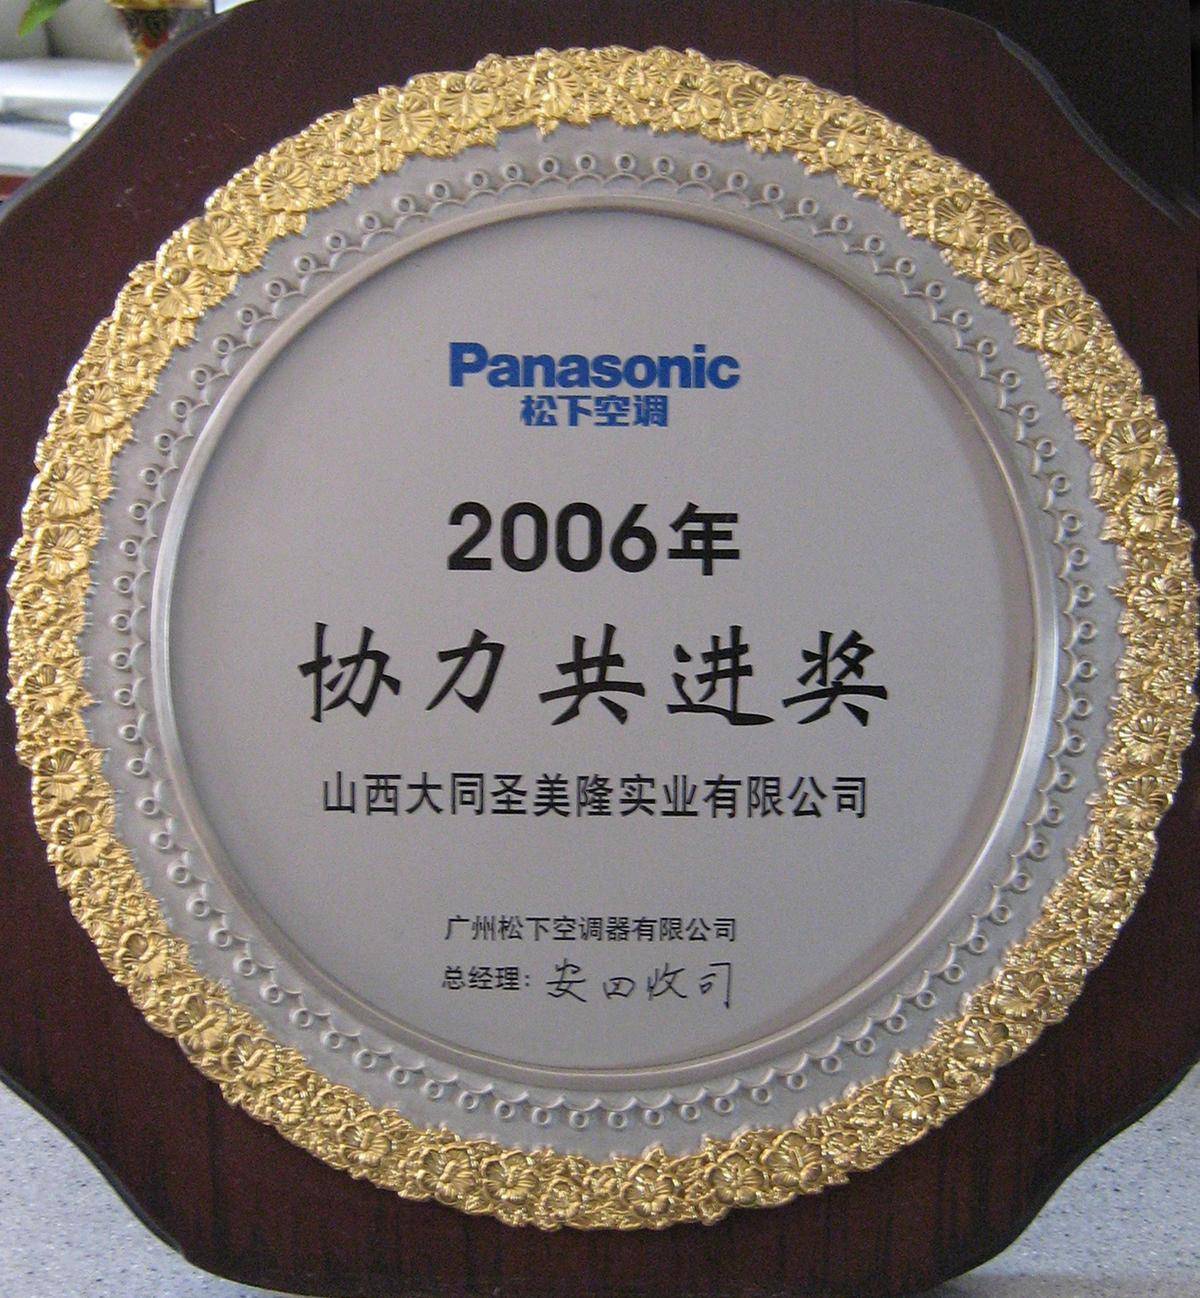 2006Э